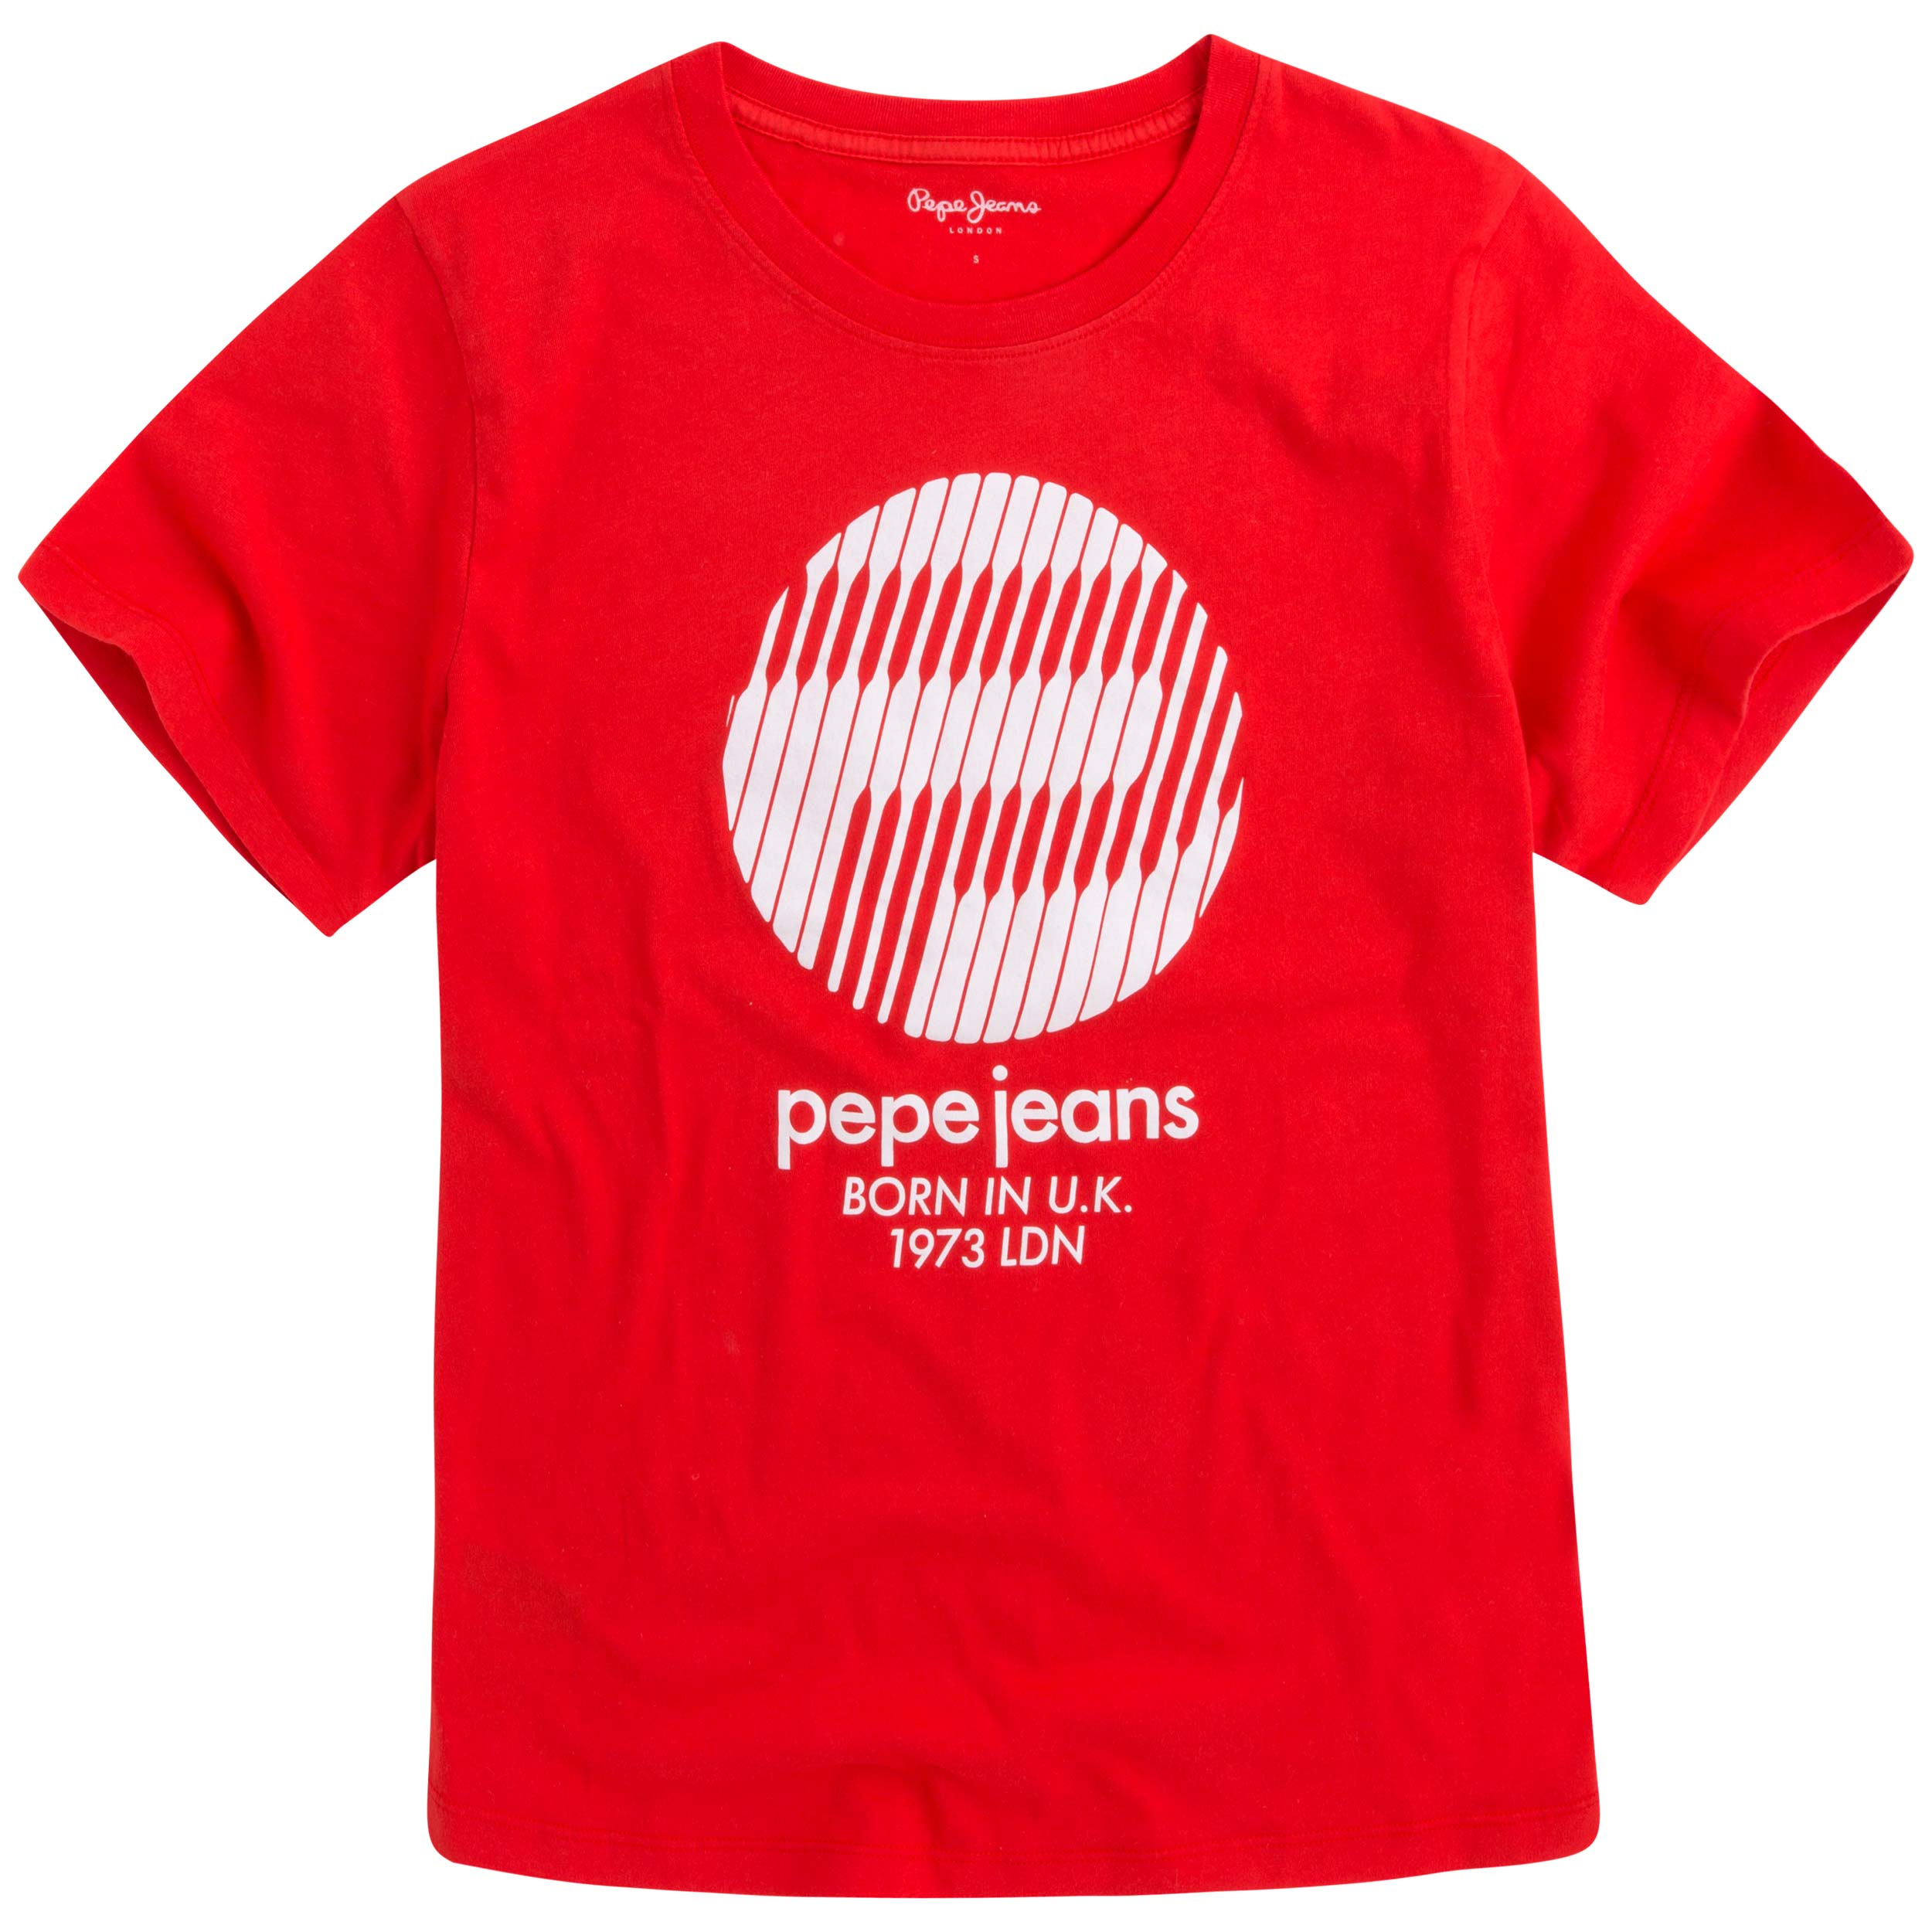 Пе сс. Футболка Pepe Jeans. Детская футболка the North face. Pepe Jeans футболка красная женская.